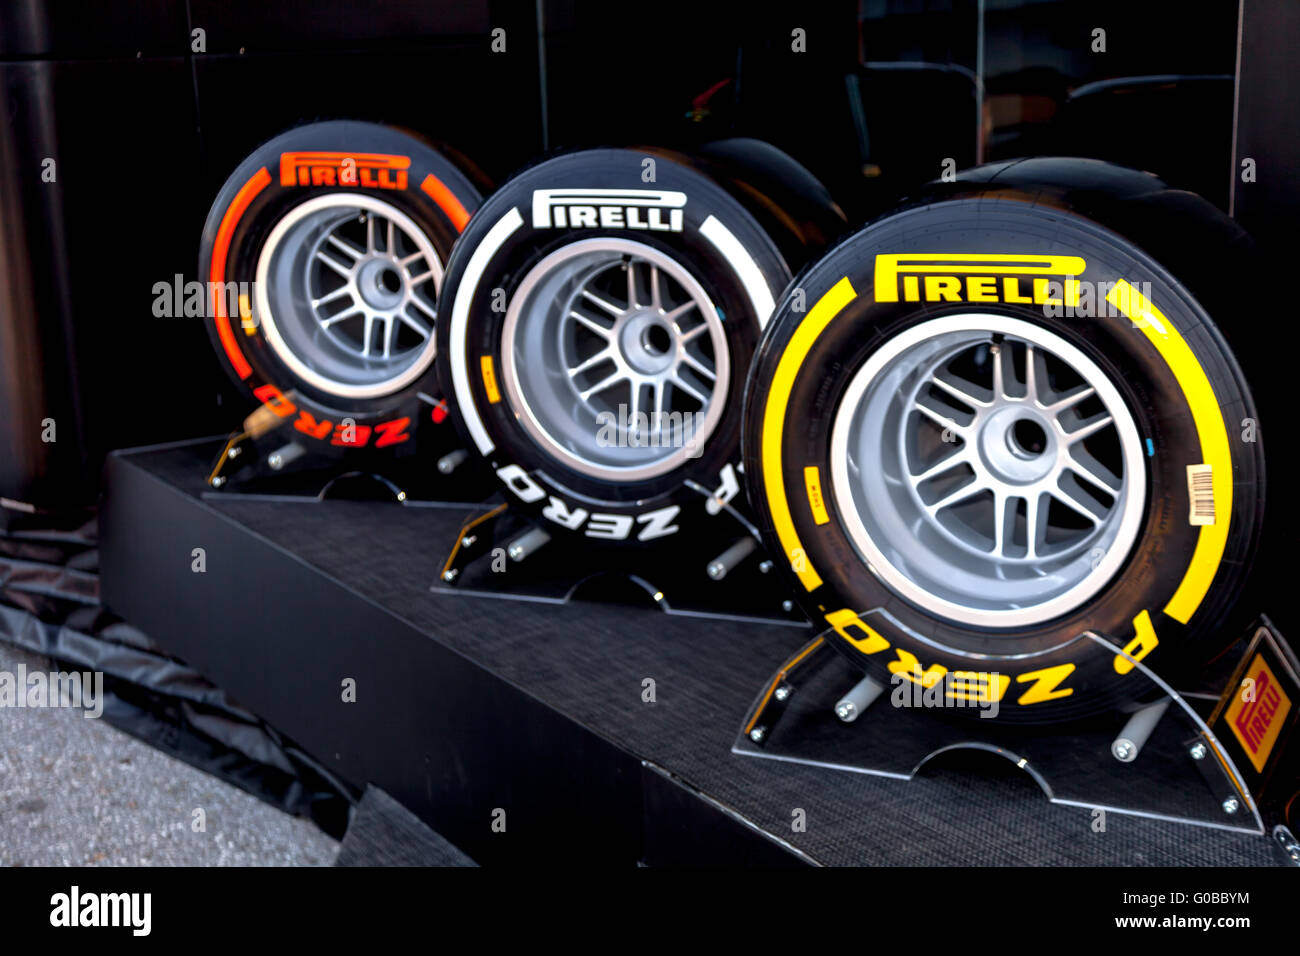 Pneumatic tires Pirelli Stock Photo